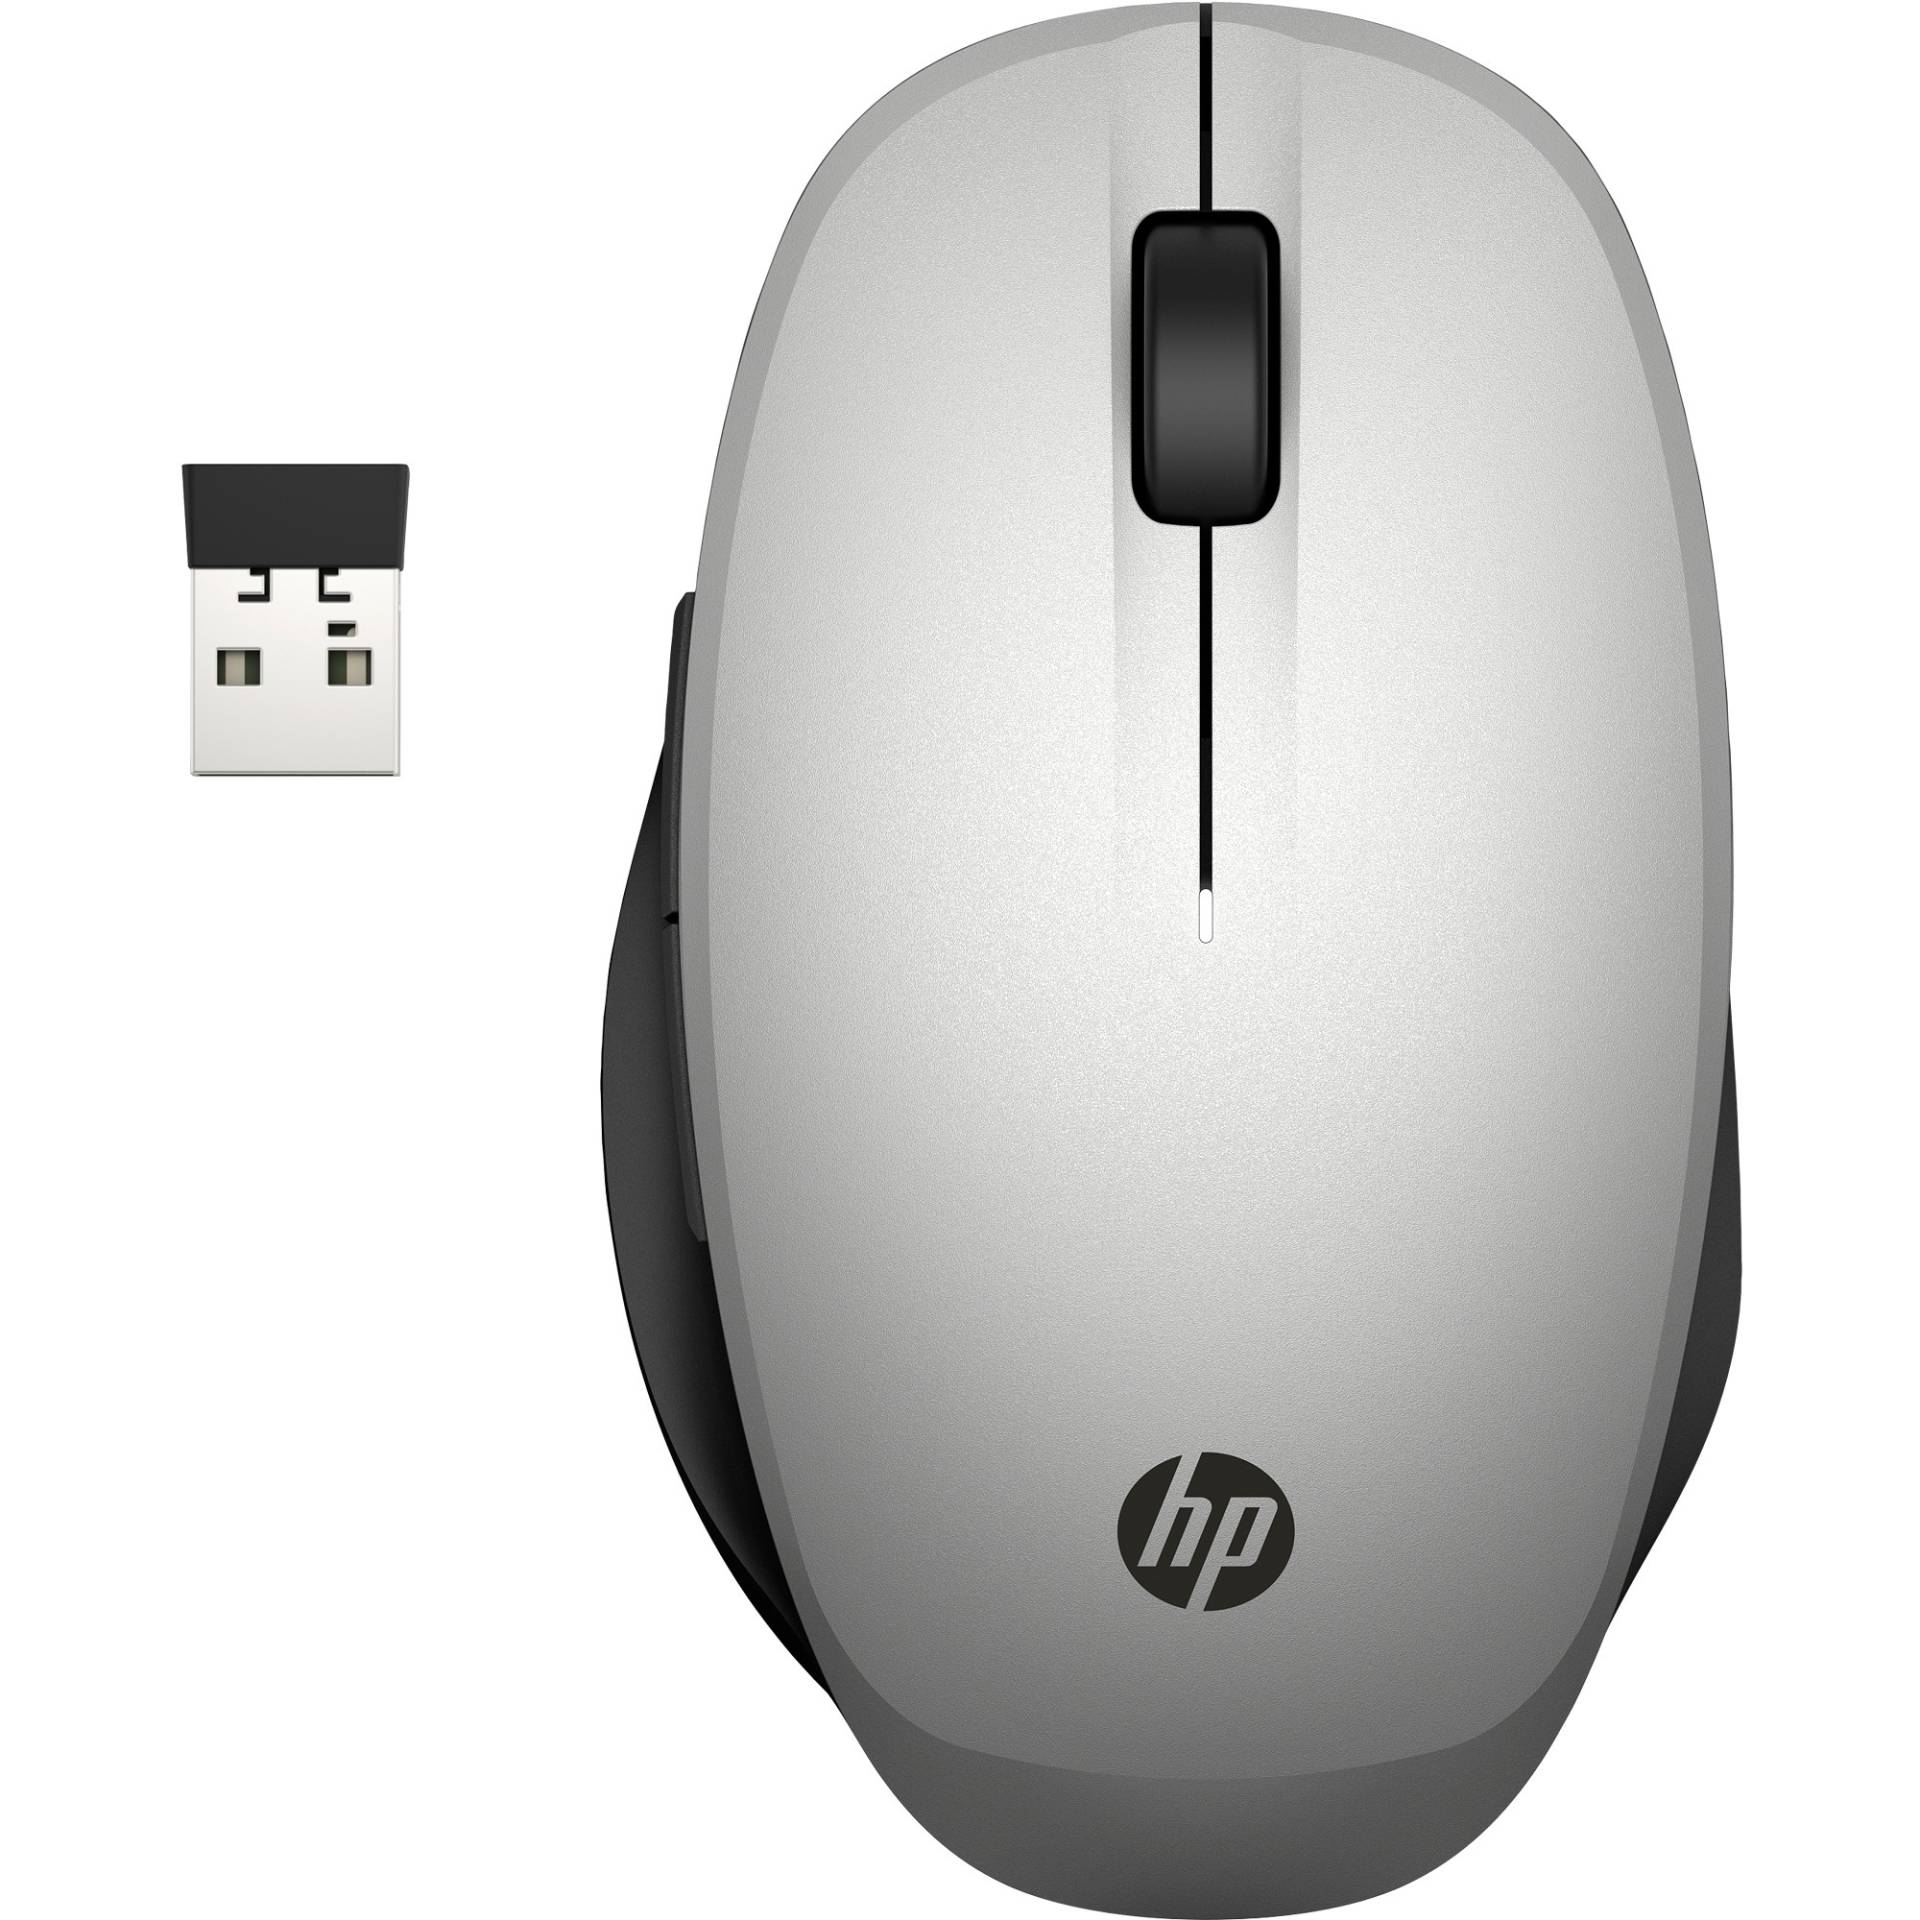 Dual Mode Mouse 300, Maus von HP